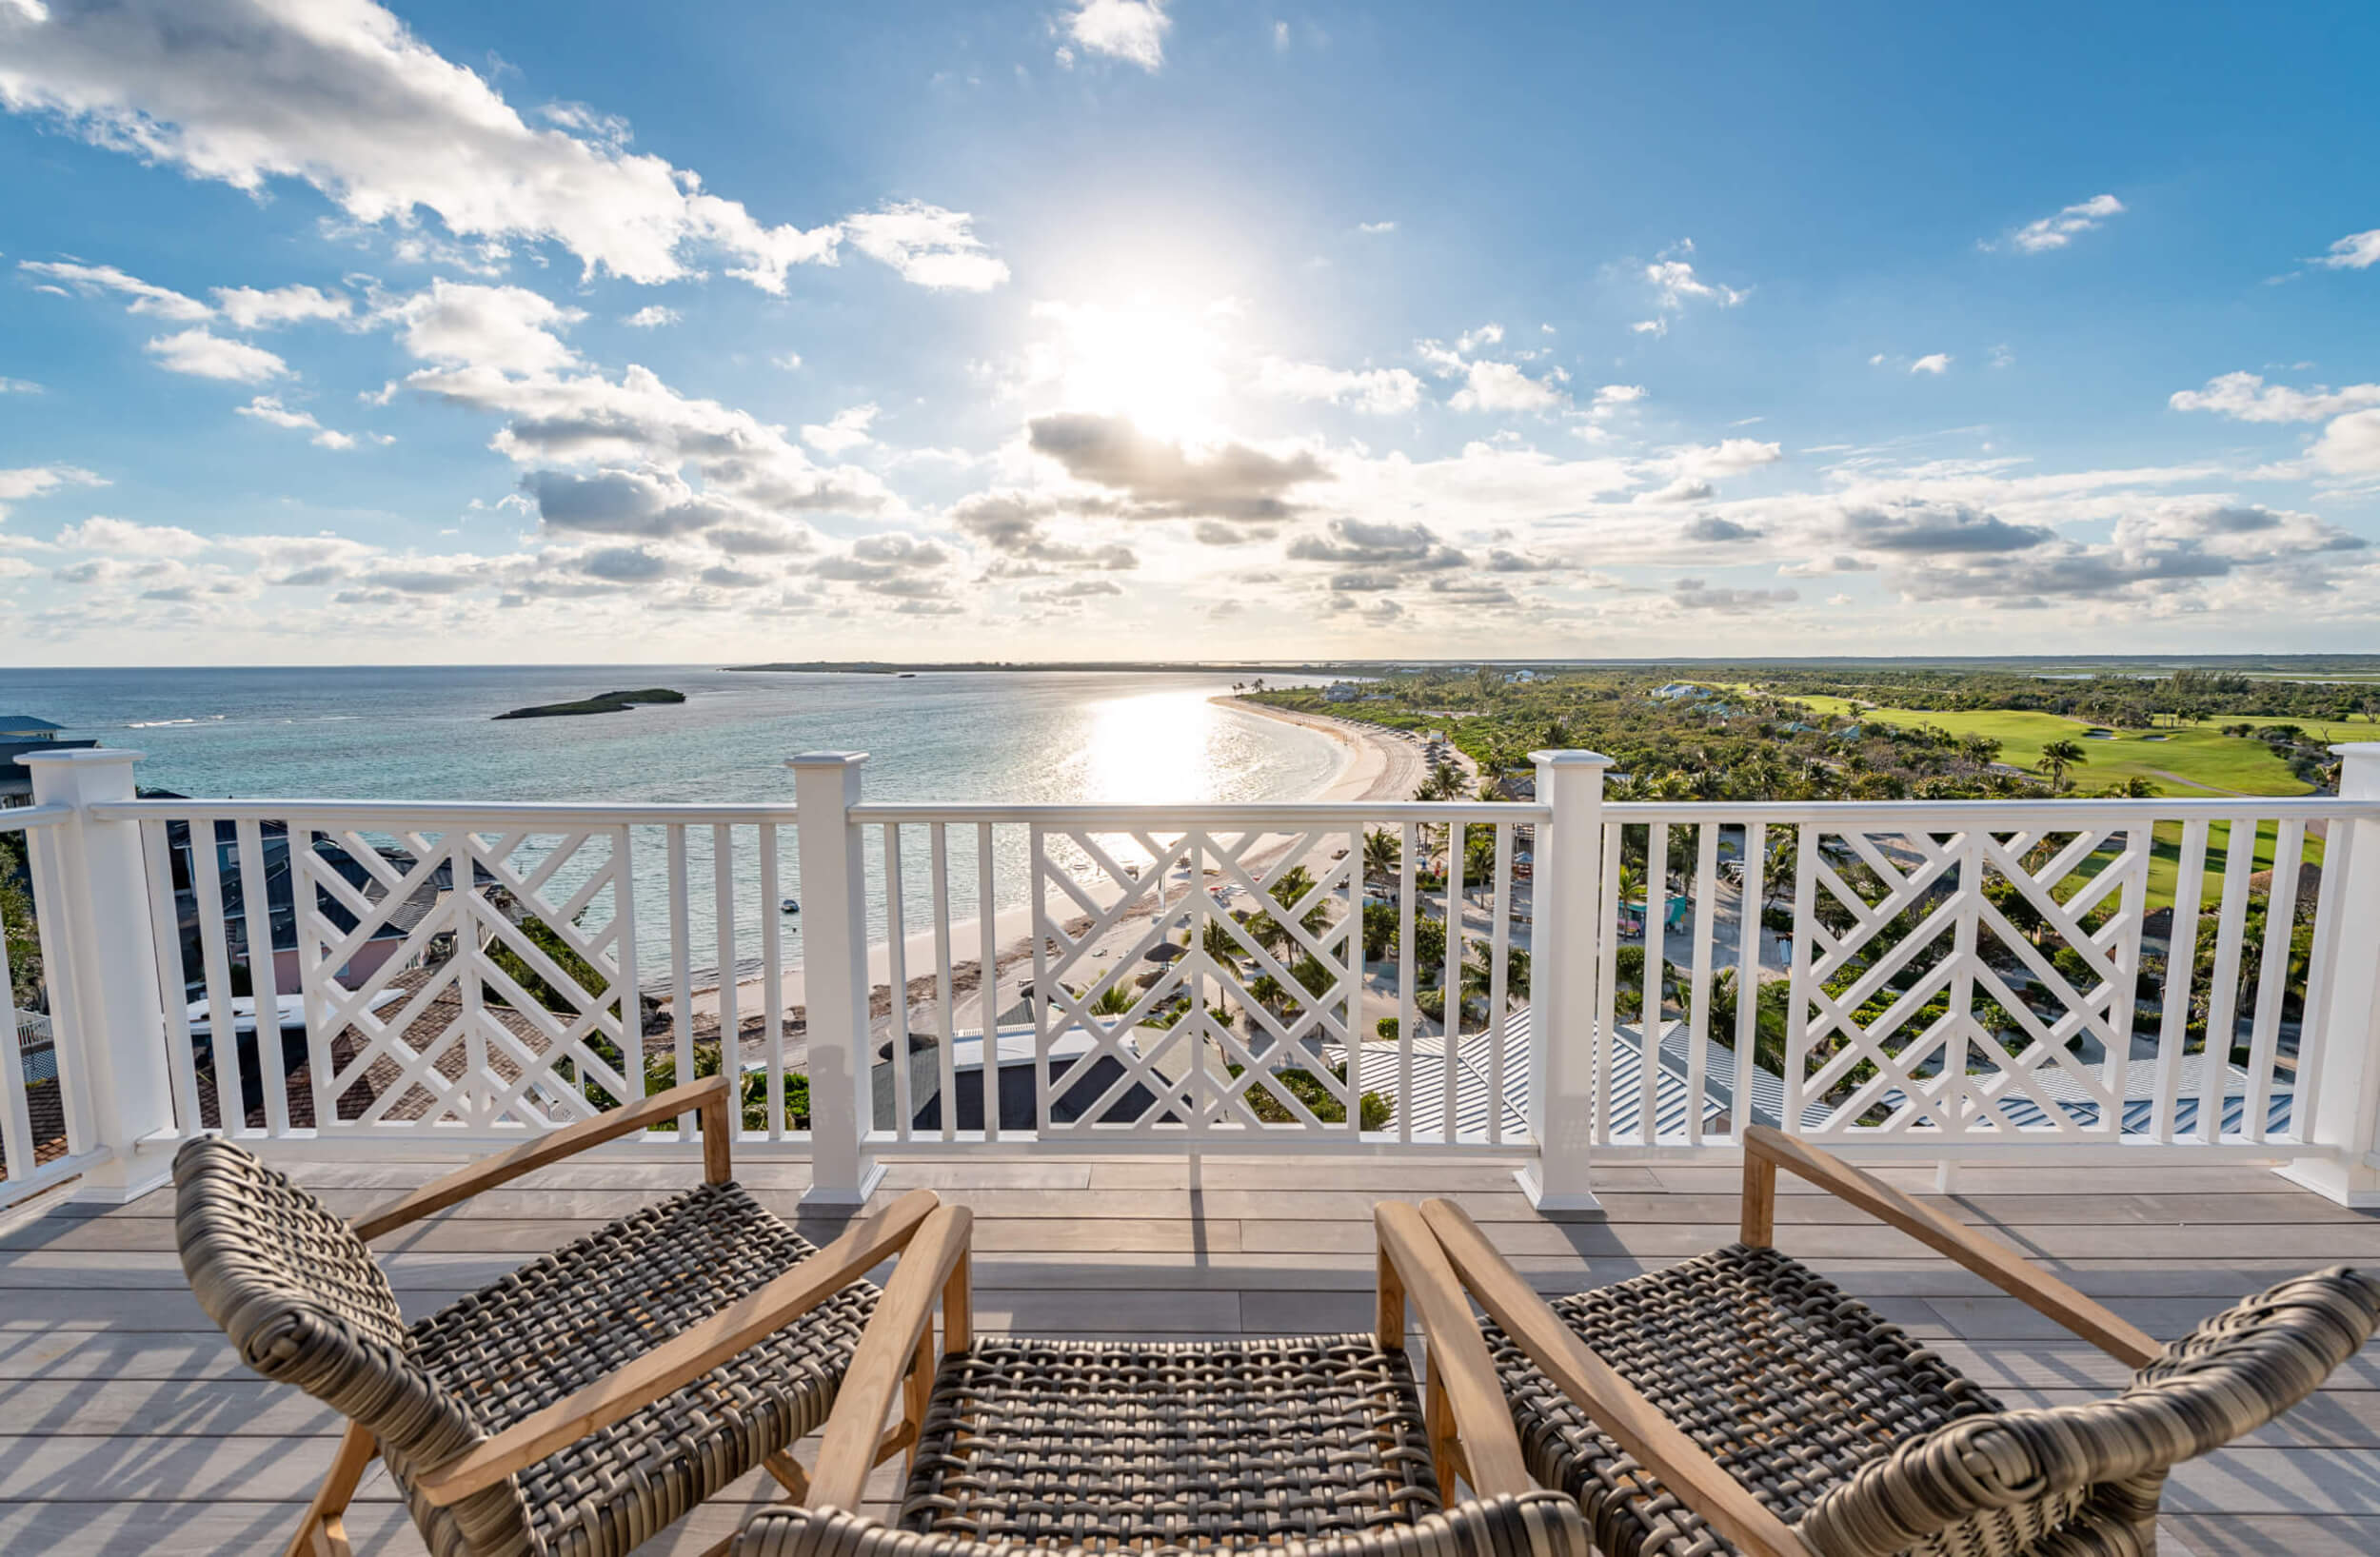 Balcony of a house in The Ridge neighborhood in Bahamas